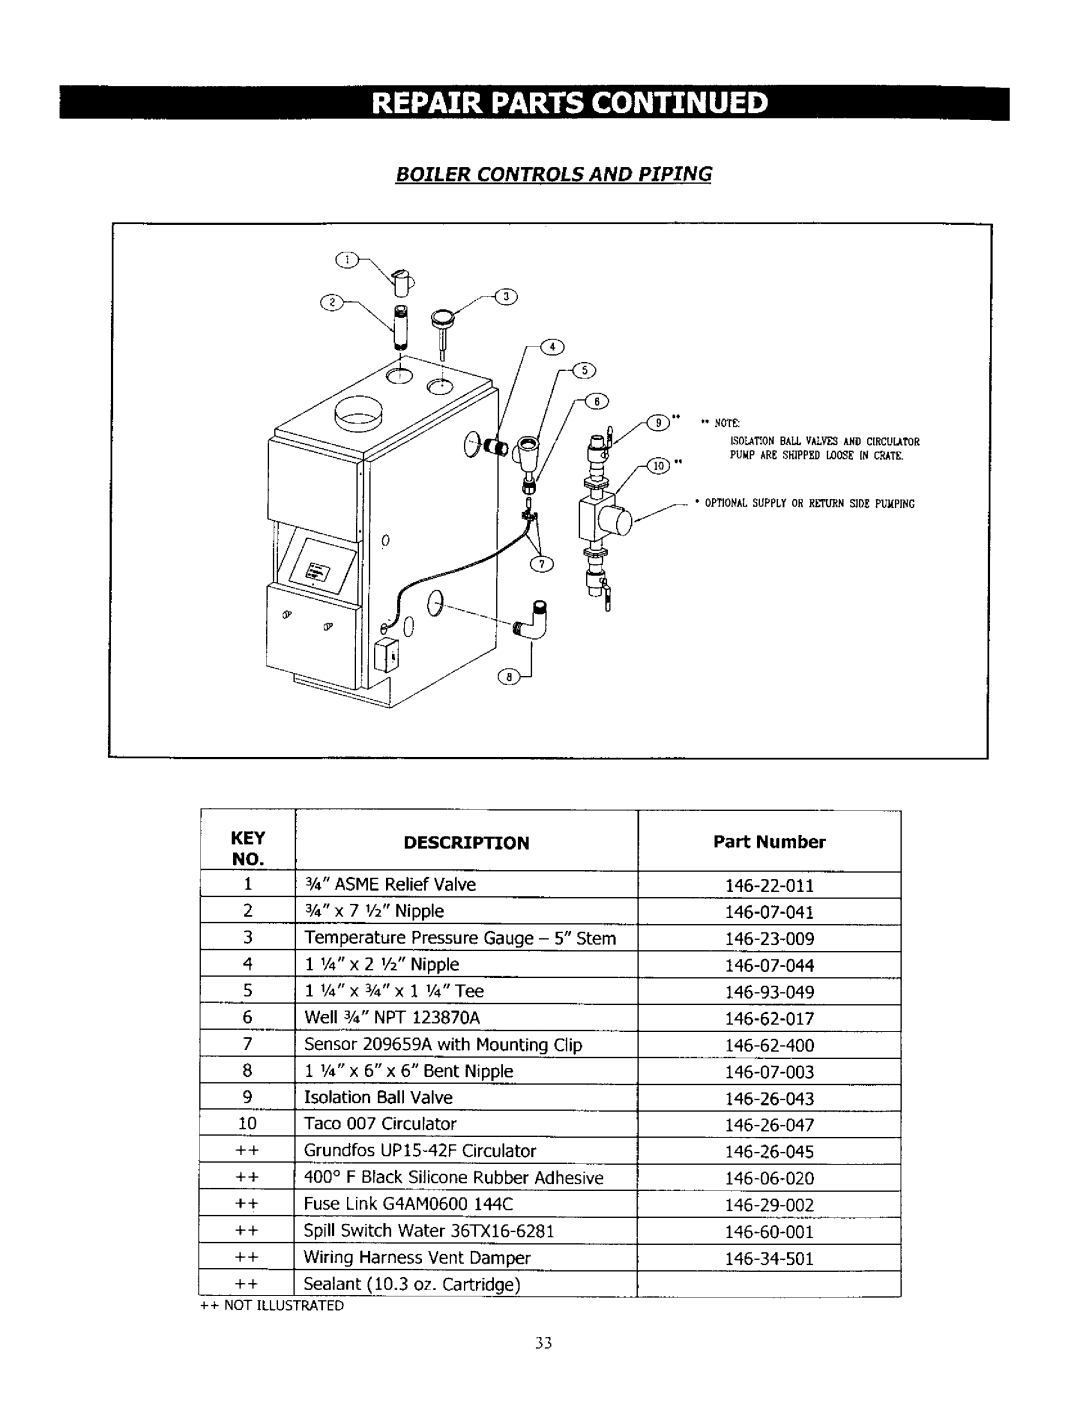 Kenmore KWX - 7V, KWX - 9V, KWX - 8V Boiler Controls And Piping, Description, Part Number, 7 1/2 Nipple, 1/4 x, 1/4 Tee 